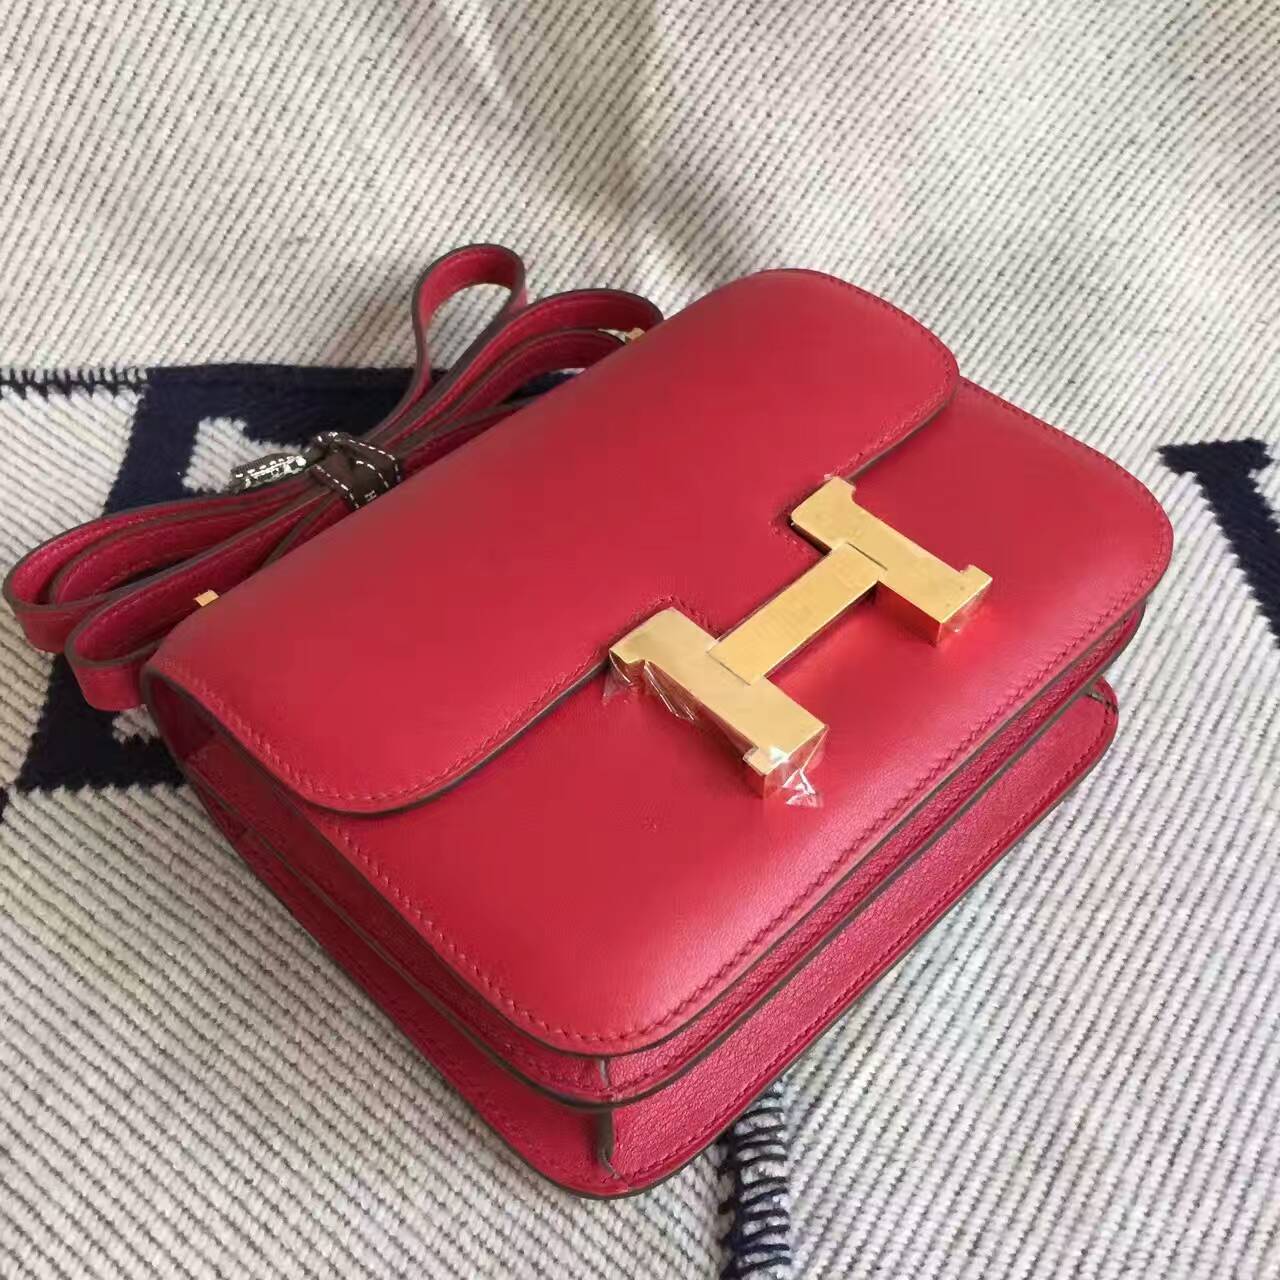 Discount Hermes K1 Rouge Grenade Swift Leather Constance Bag19cm